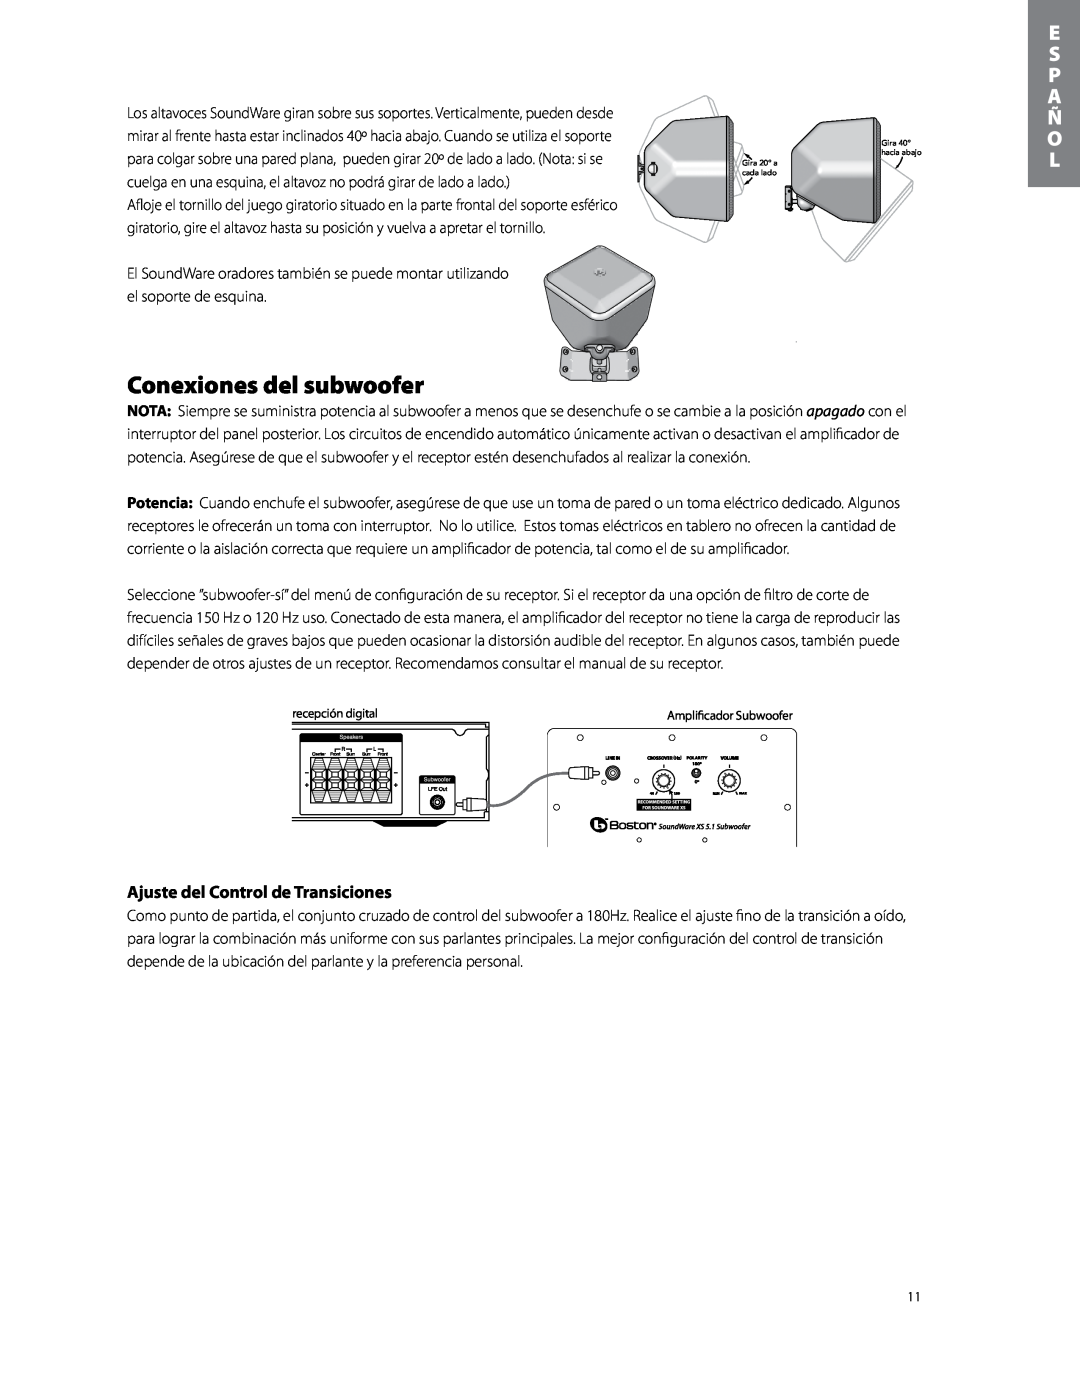 Boston Acoustics soundware xs 5.1 5.1 surround speaker system owner manual Conexiones del subwoofer, E S P A ñ O L 